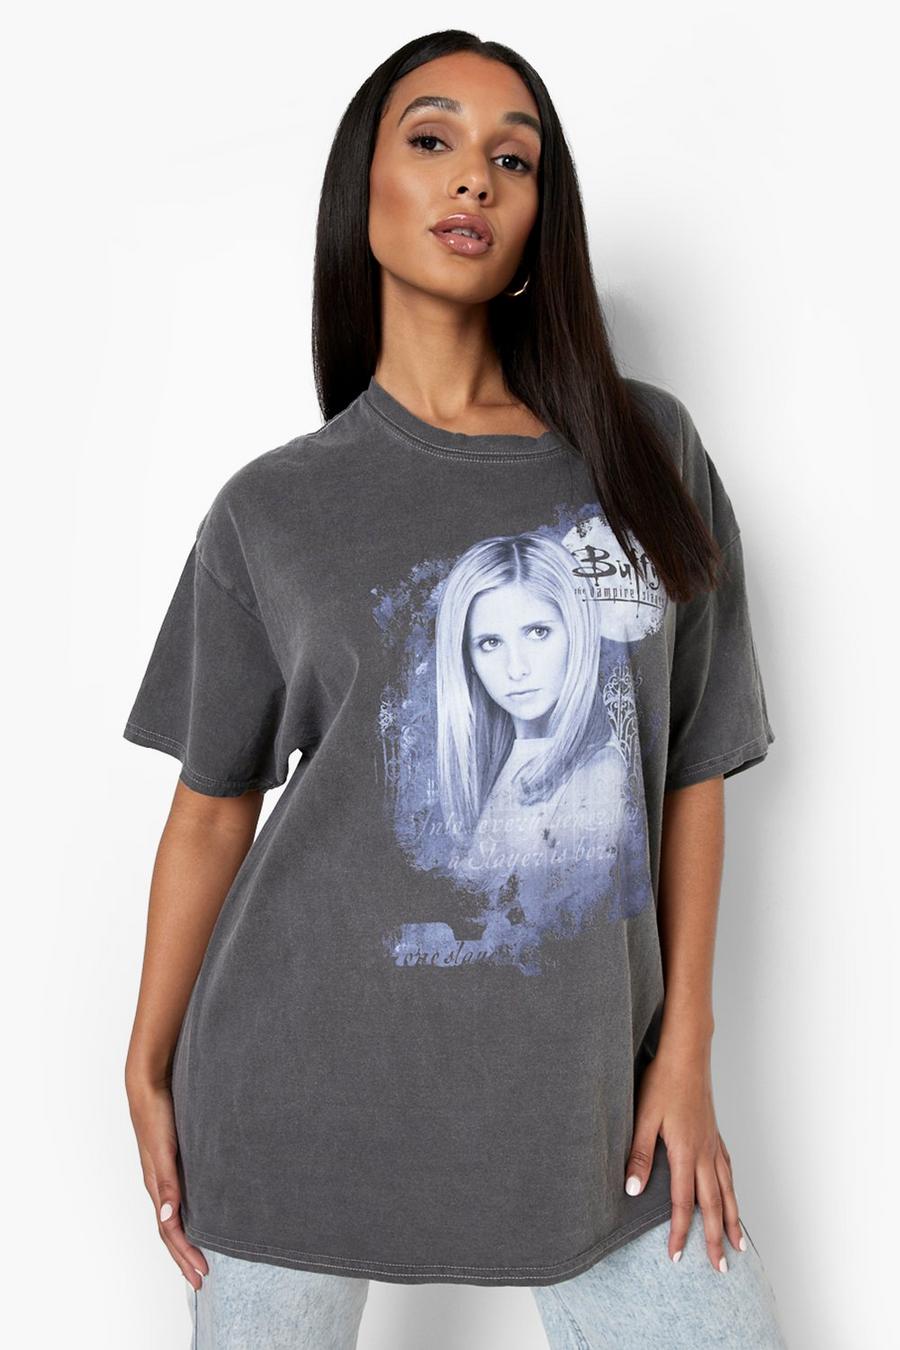 T-shirt di Halloween ufficiale di Buffy L’Ammazza vampiri, Charcoal gris